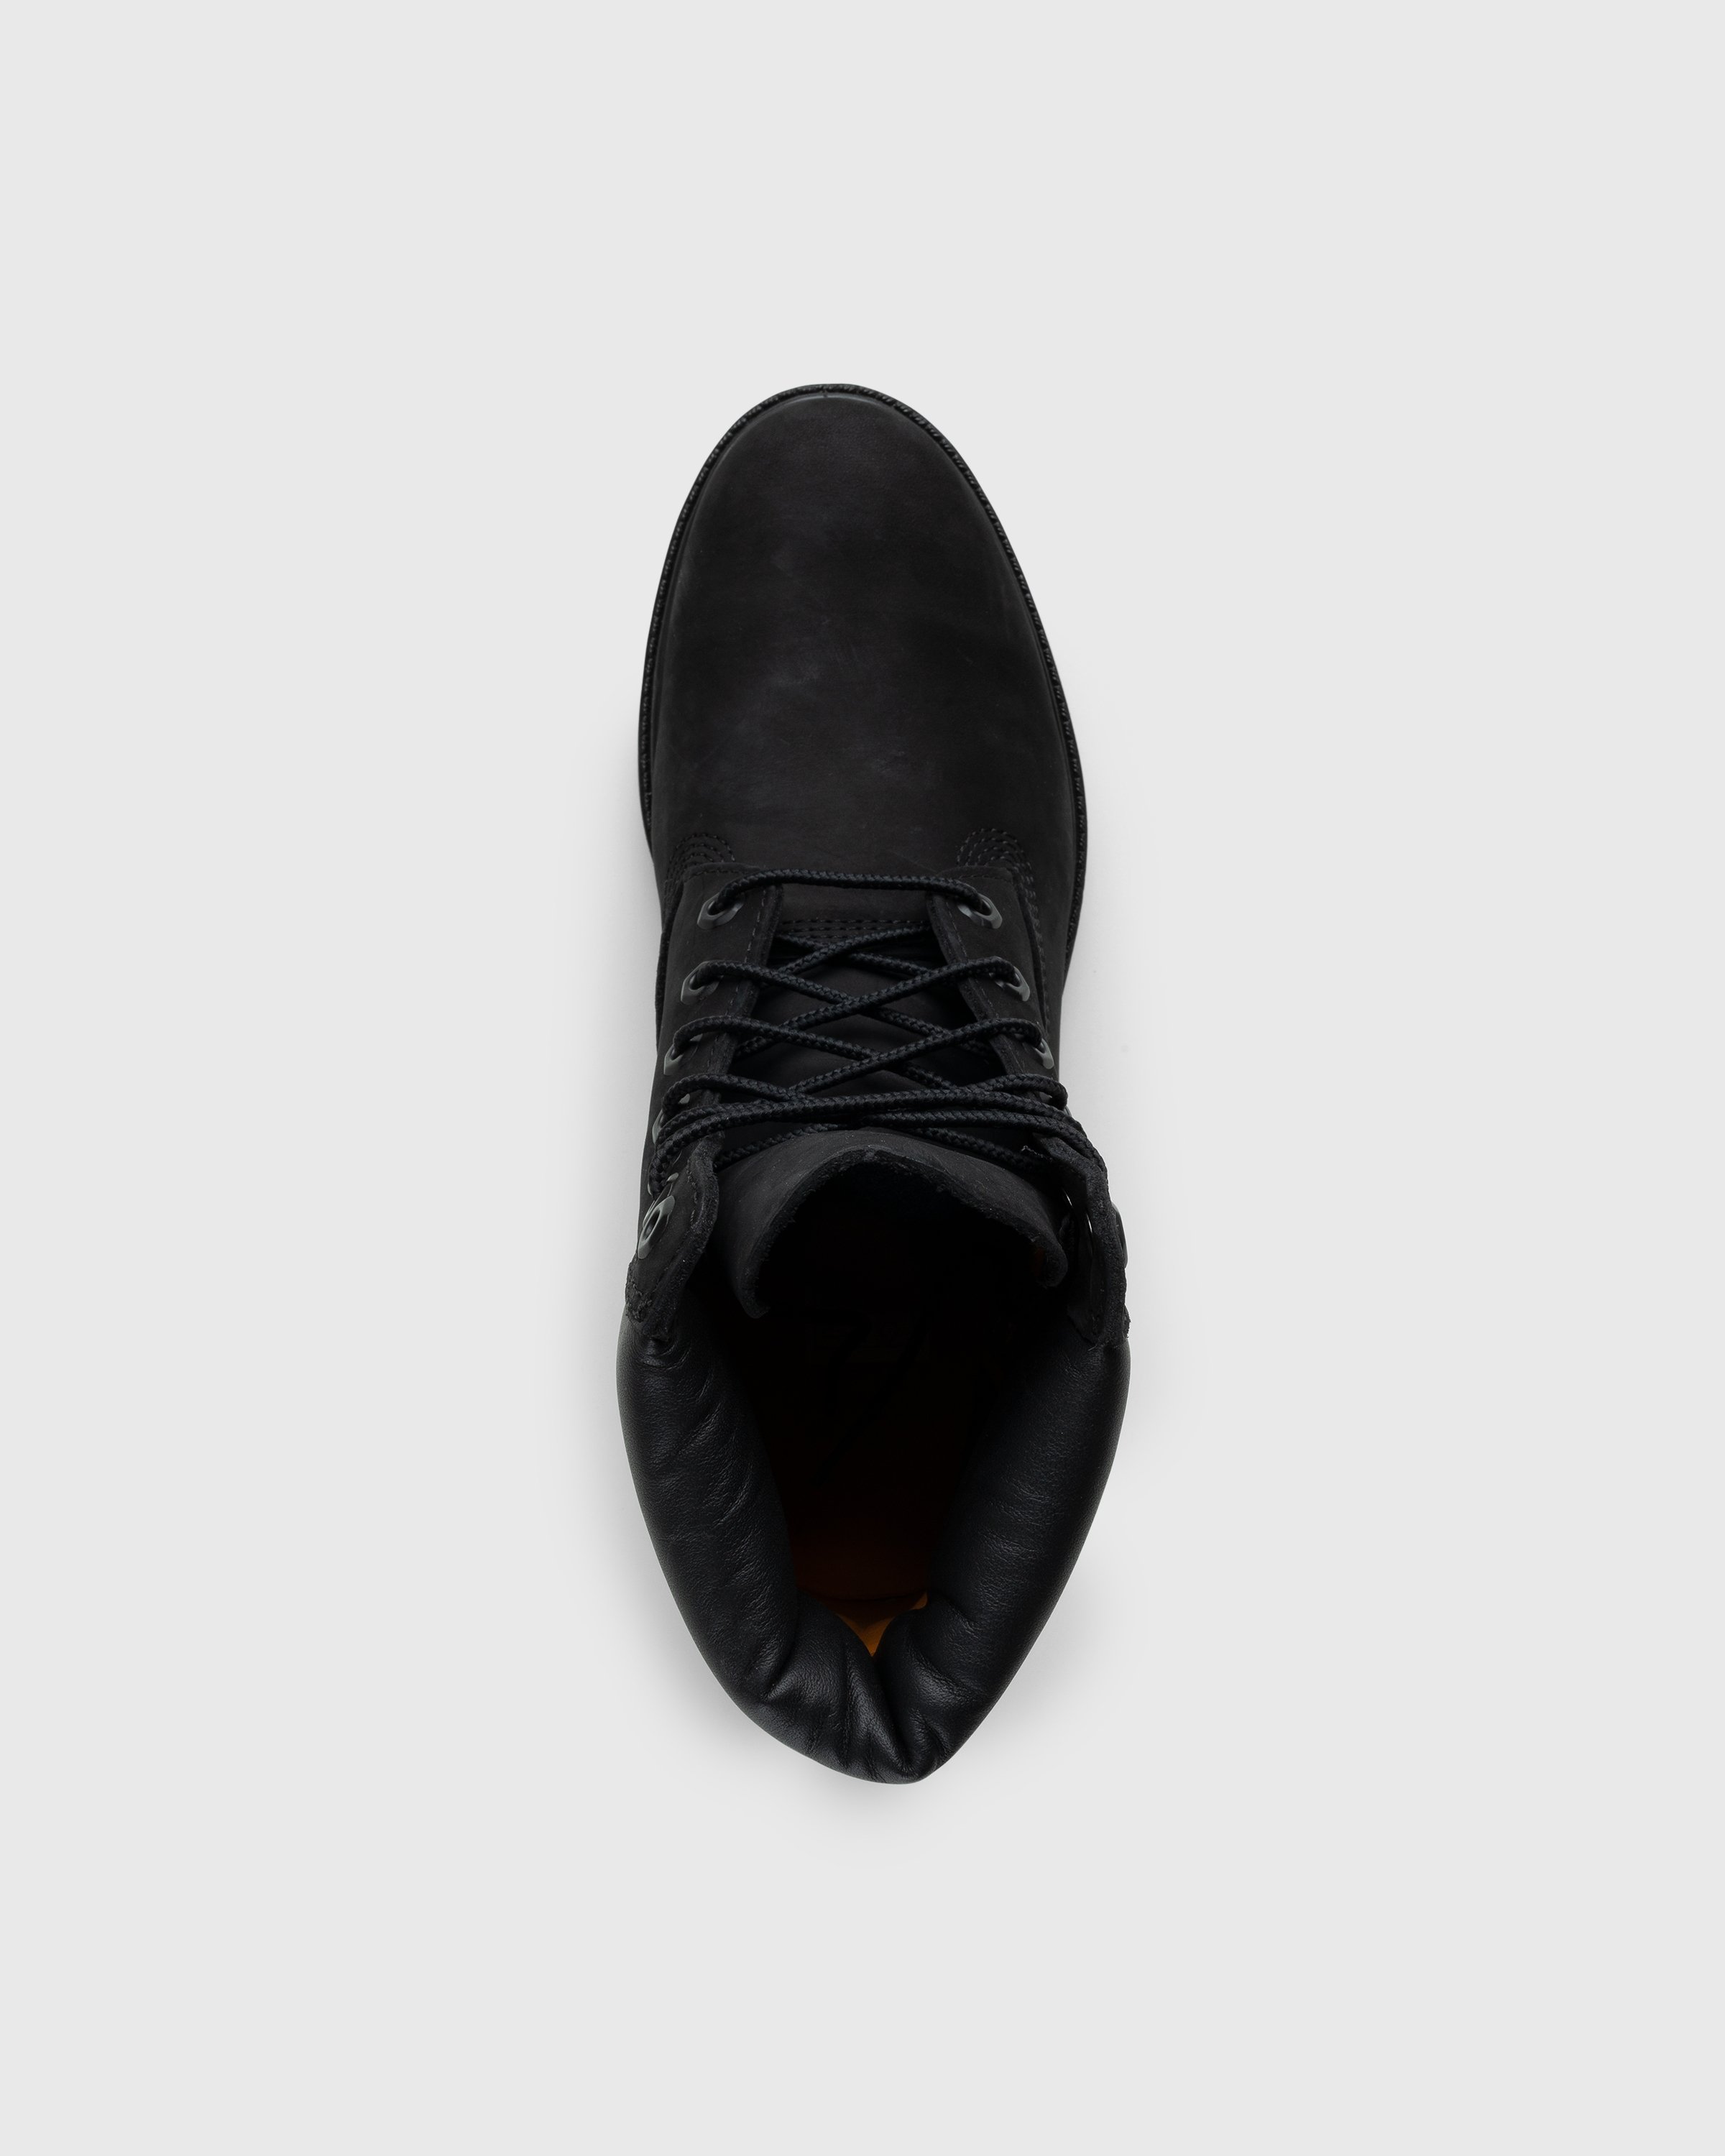 Timberland - 6 Inch Premium Boot Black - Footwear - Black - Image 5